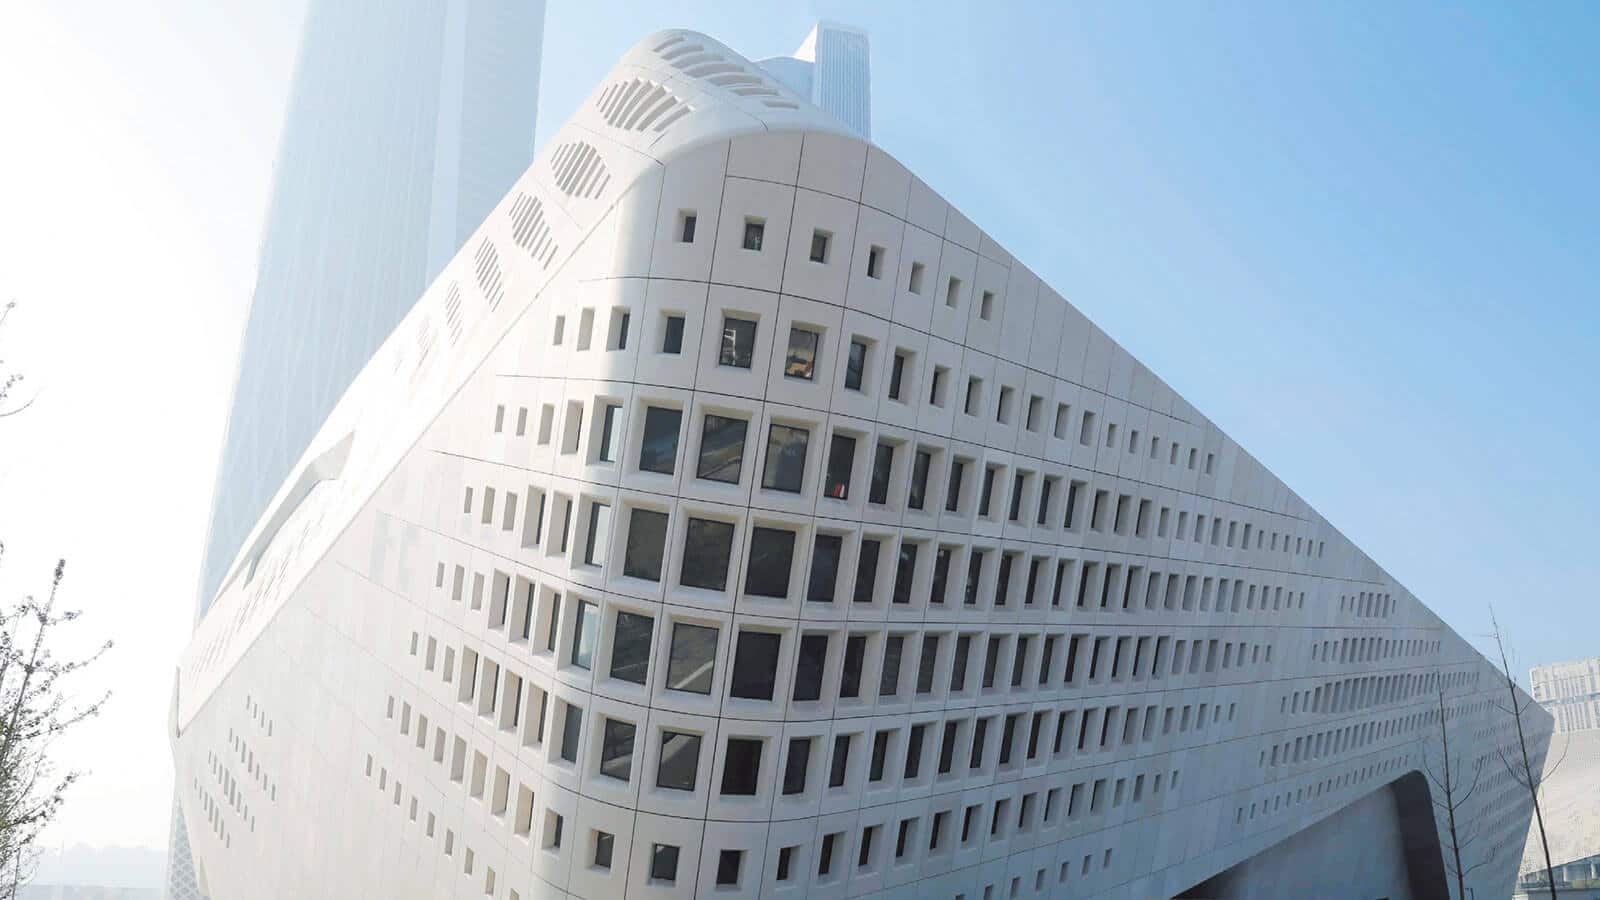 Building made of white concrete.